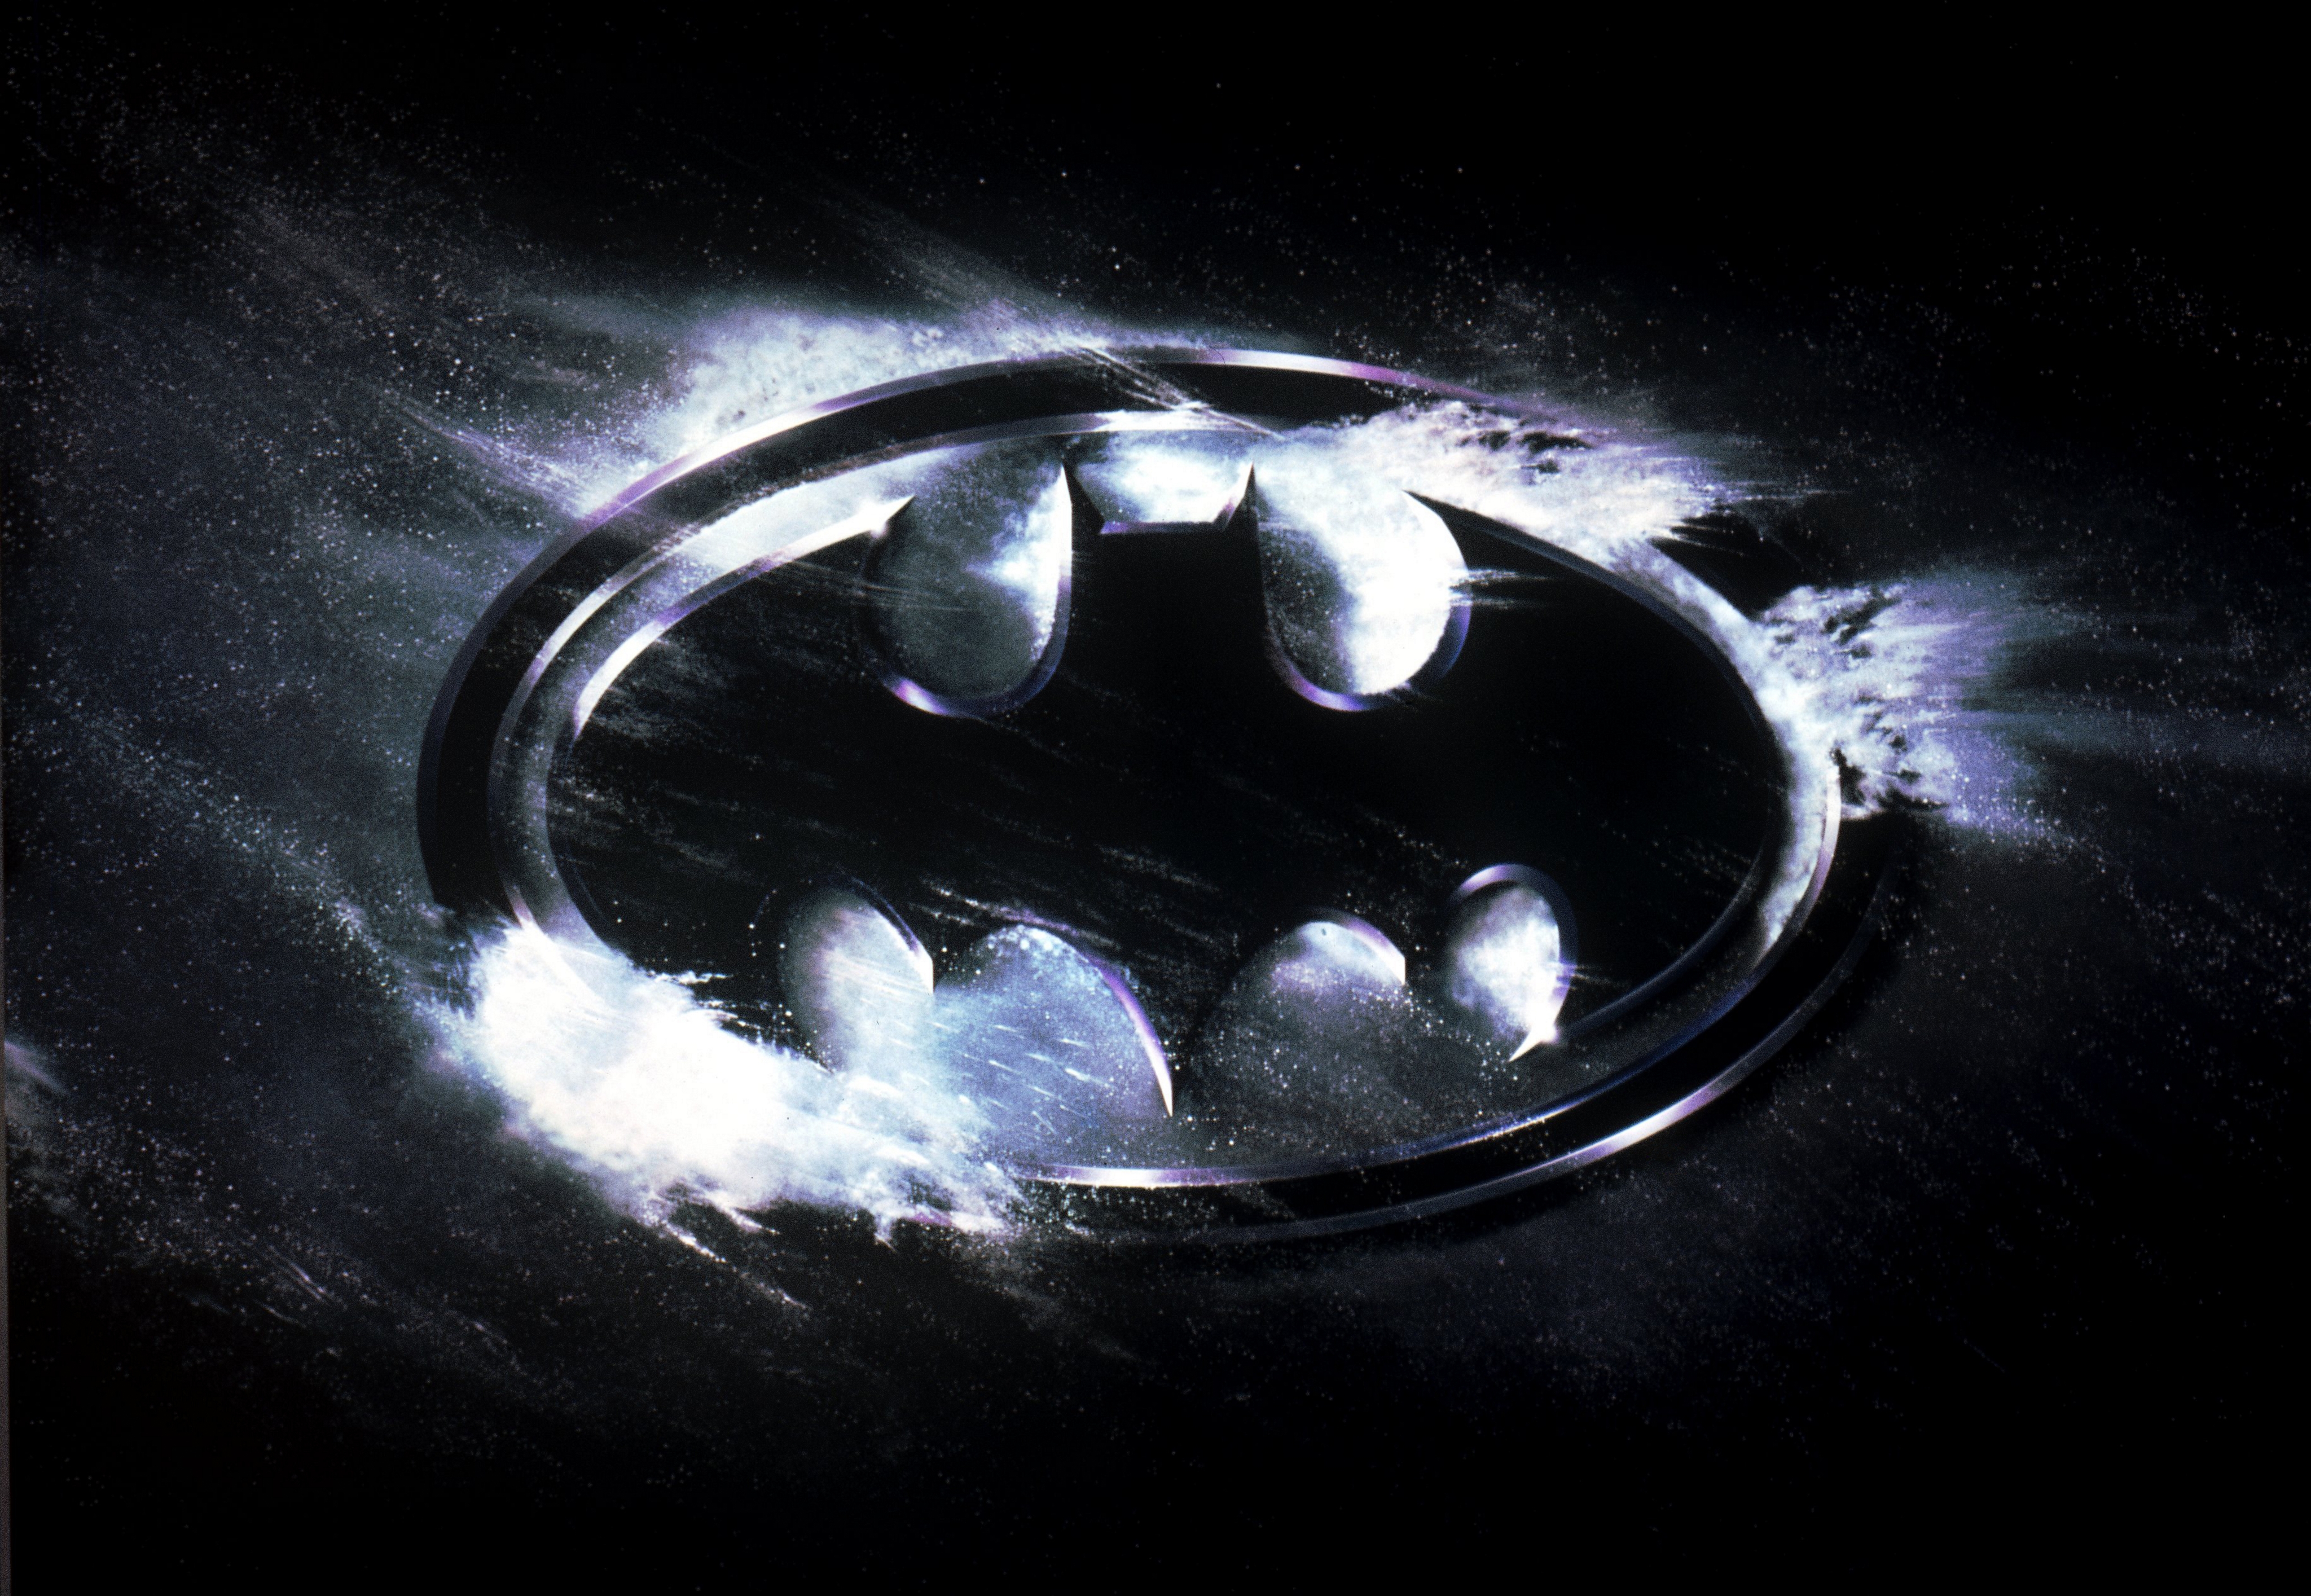 PCデスクトップに映画, バットマン, バットマン リターンズ画像を無料でダウンロード